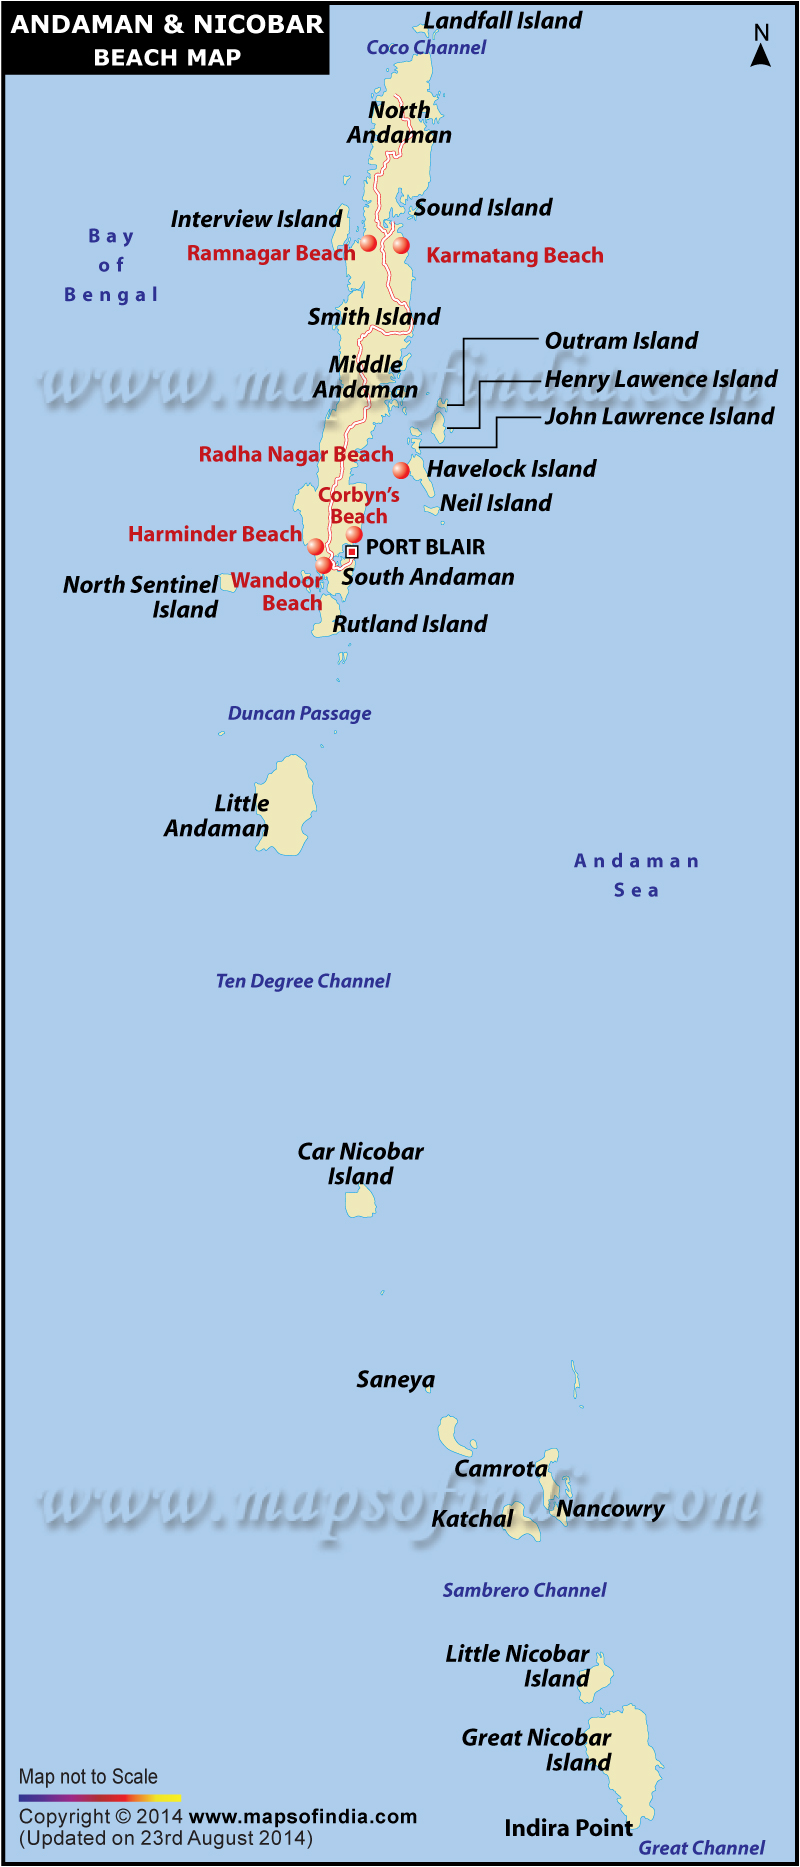 Andaman and Nicobar Island Beaches Map